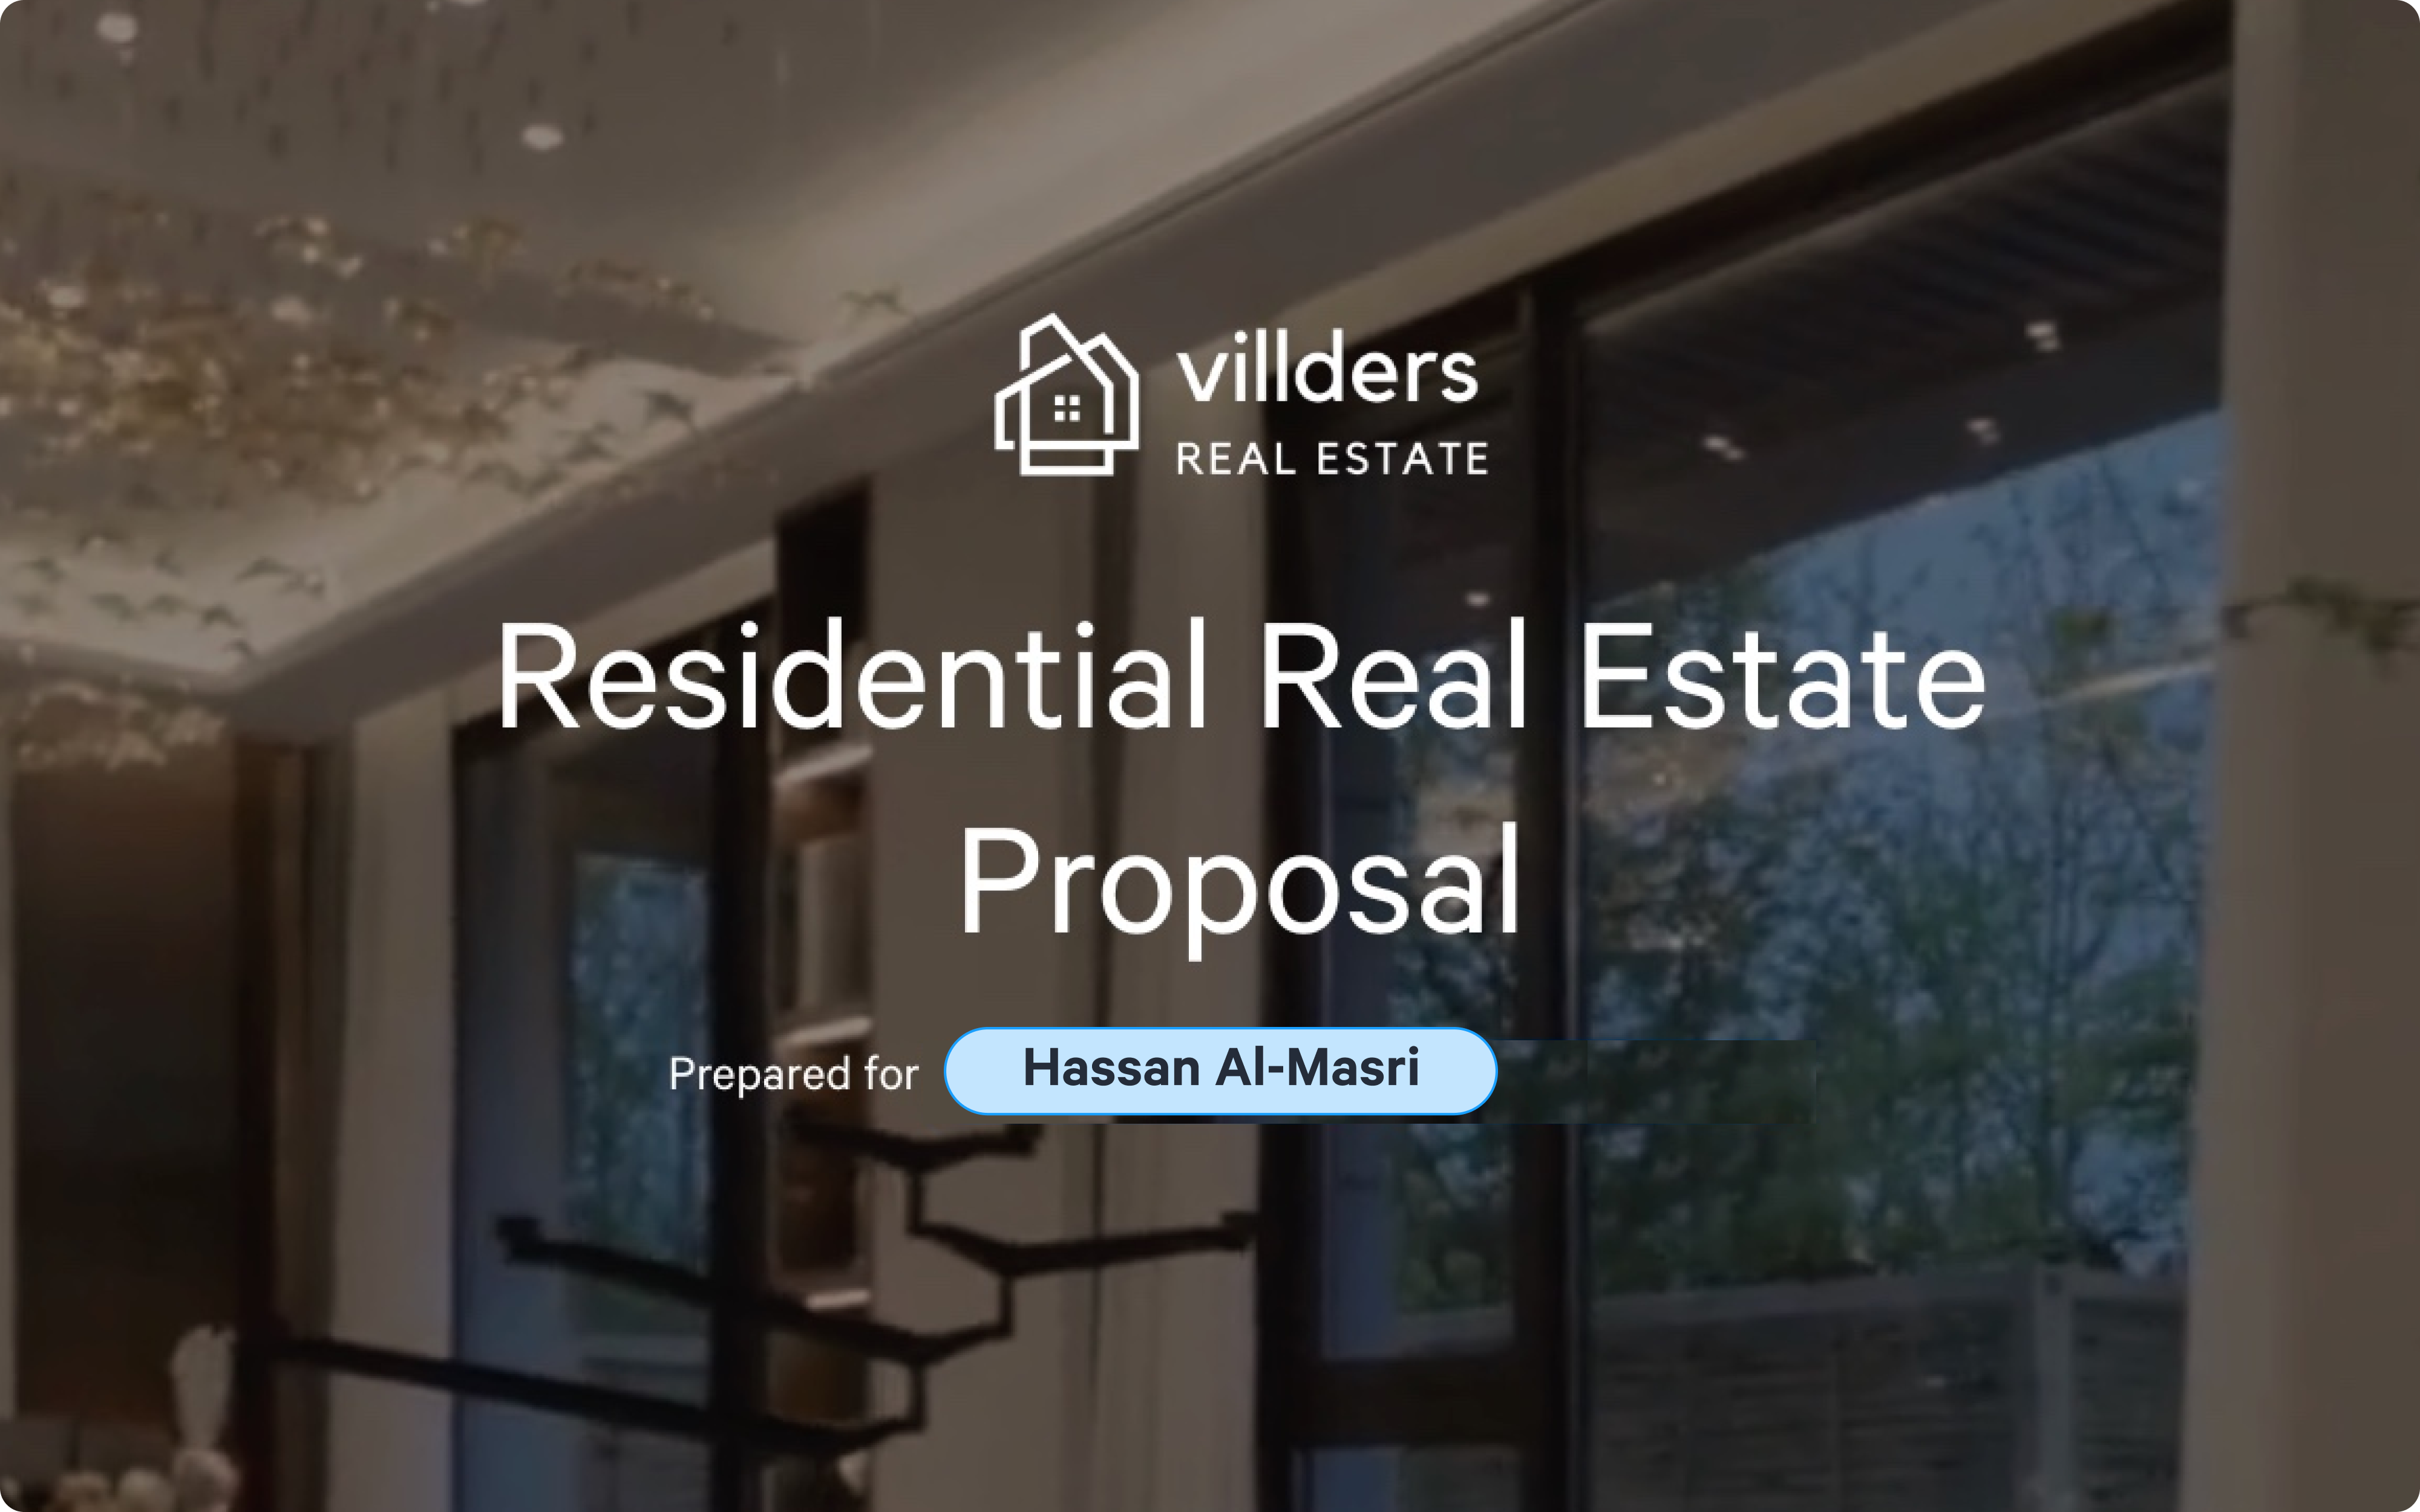 vilders real estate residential real estate proposal prepared for hassan al-masri